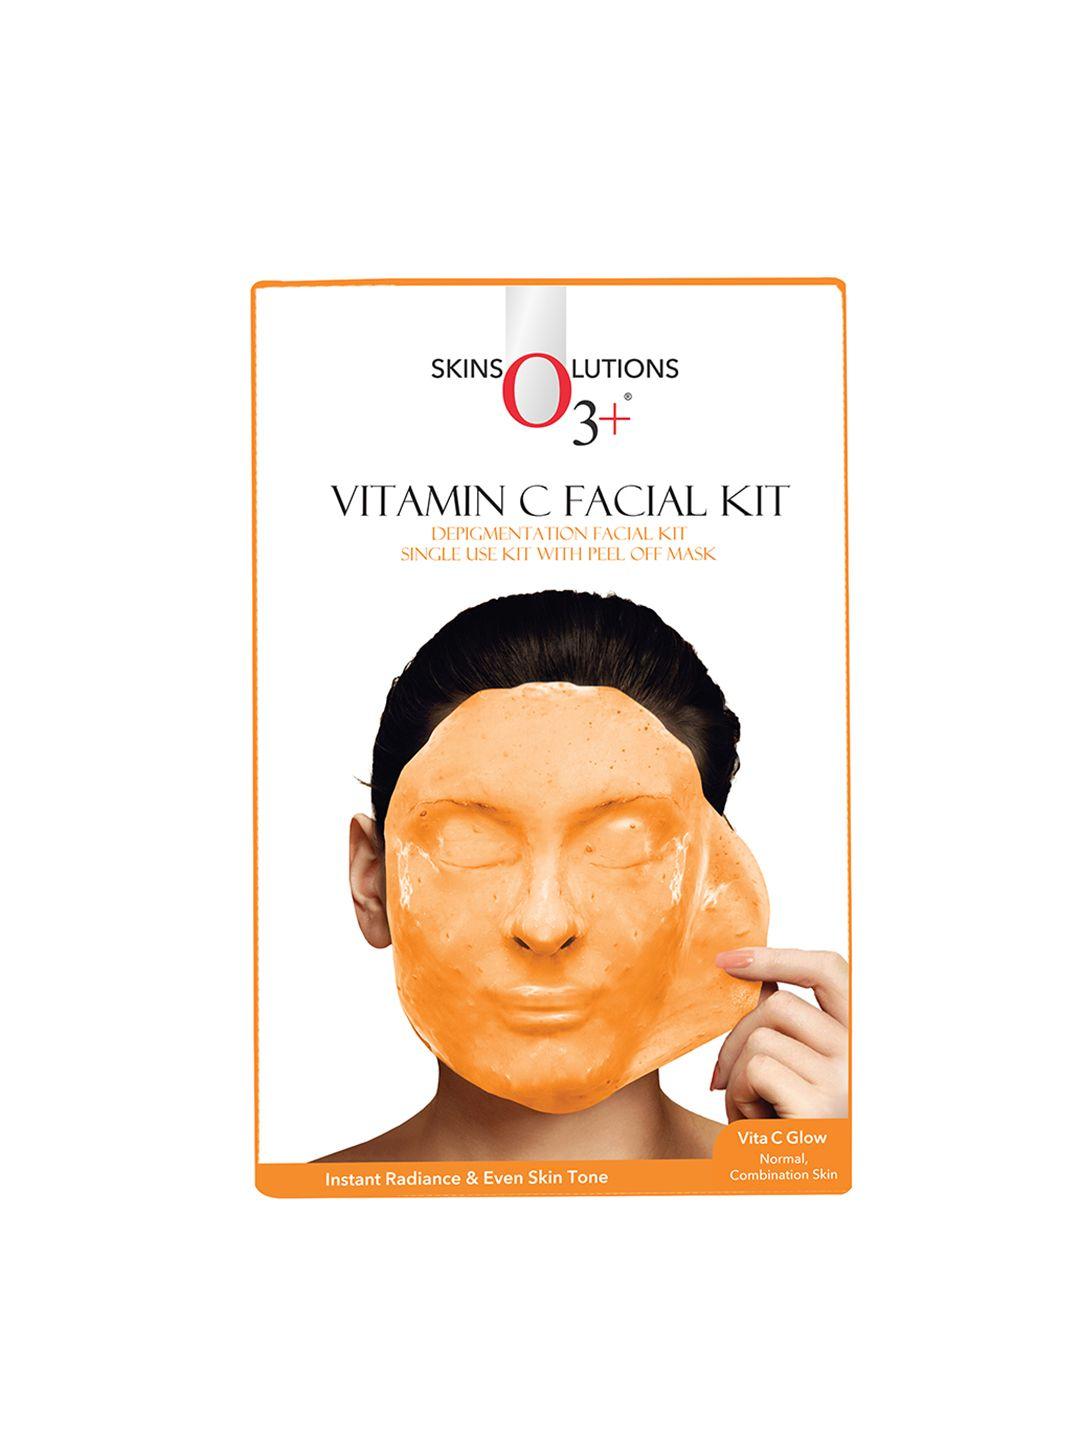 o3 vitamin c facial kit for instant radiance & even skin tone - 40g + 5ml